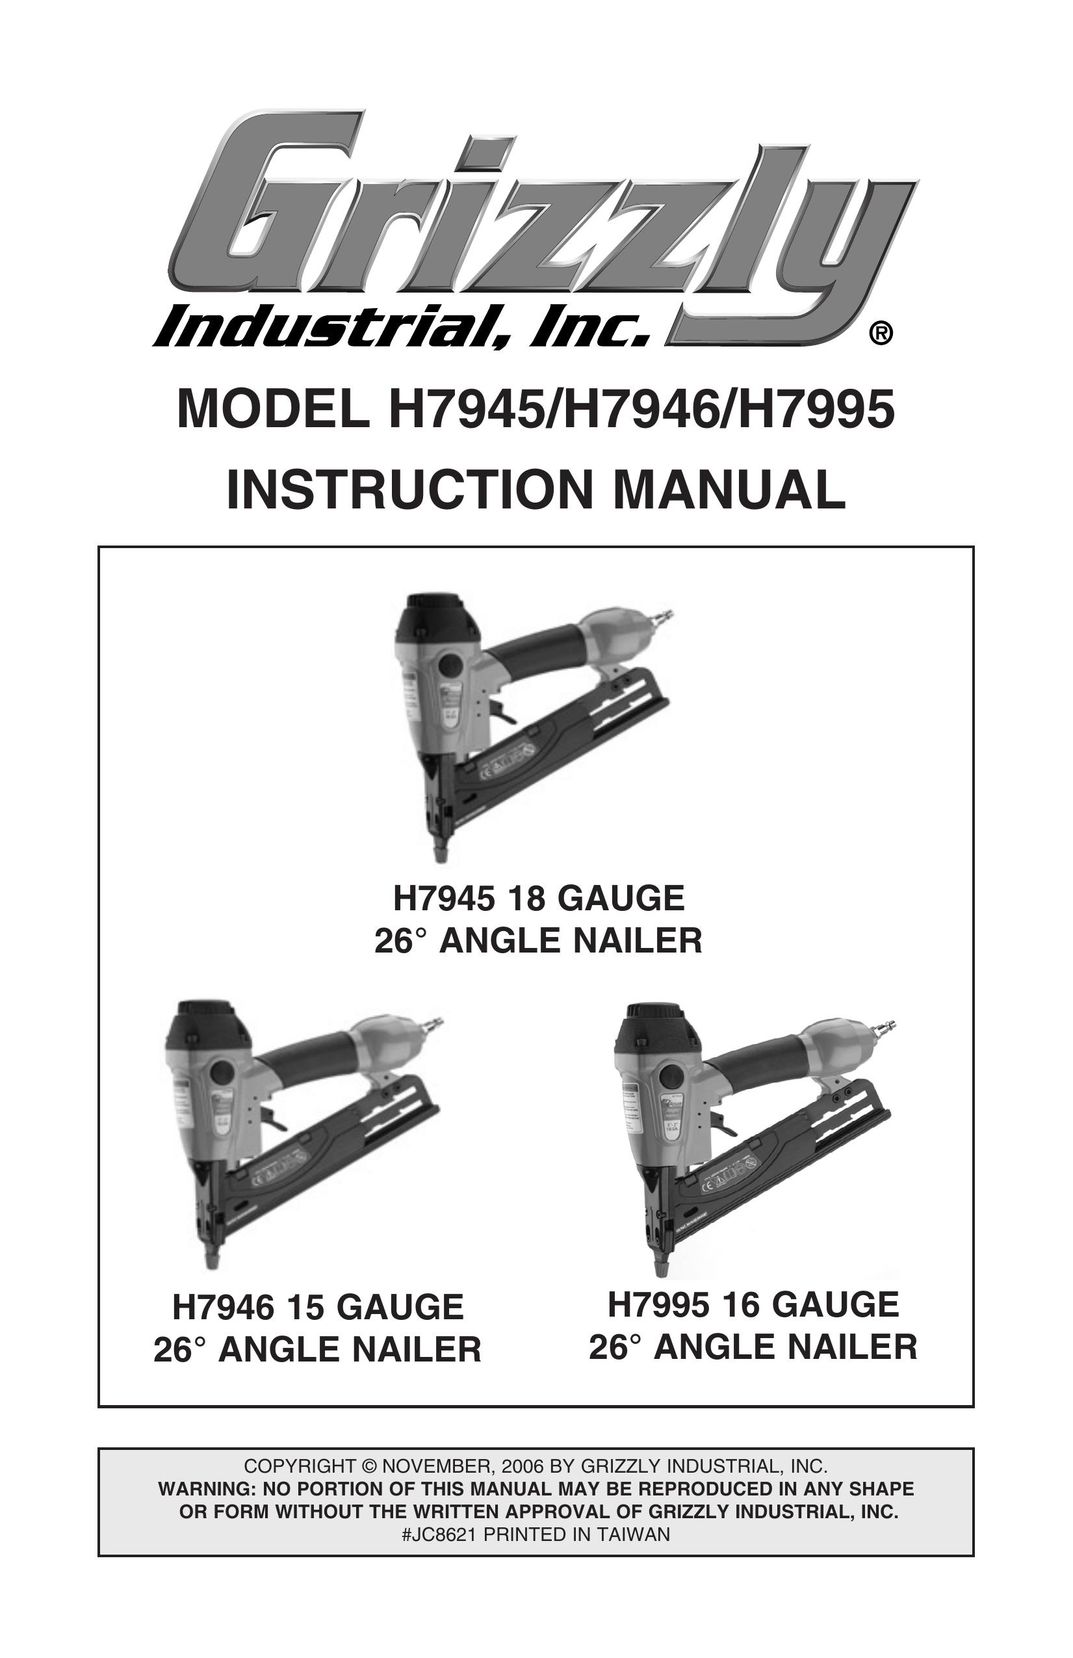 Grizzly H7995 Nail Gun User Manual